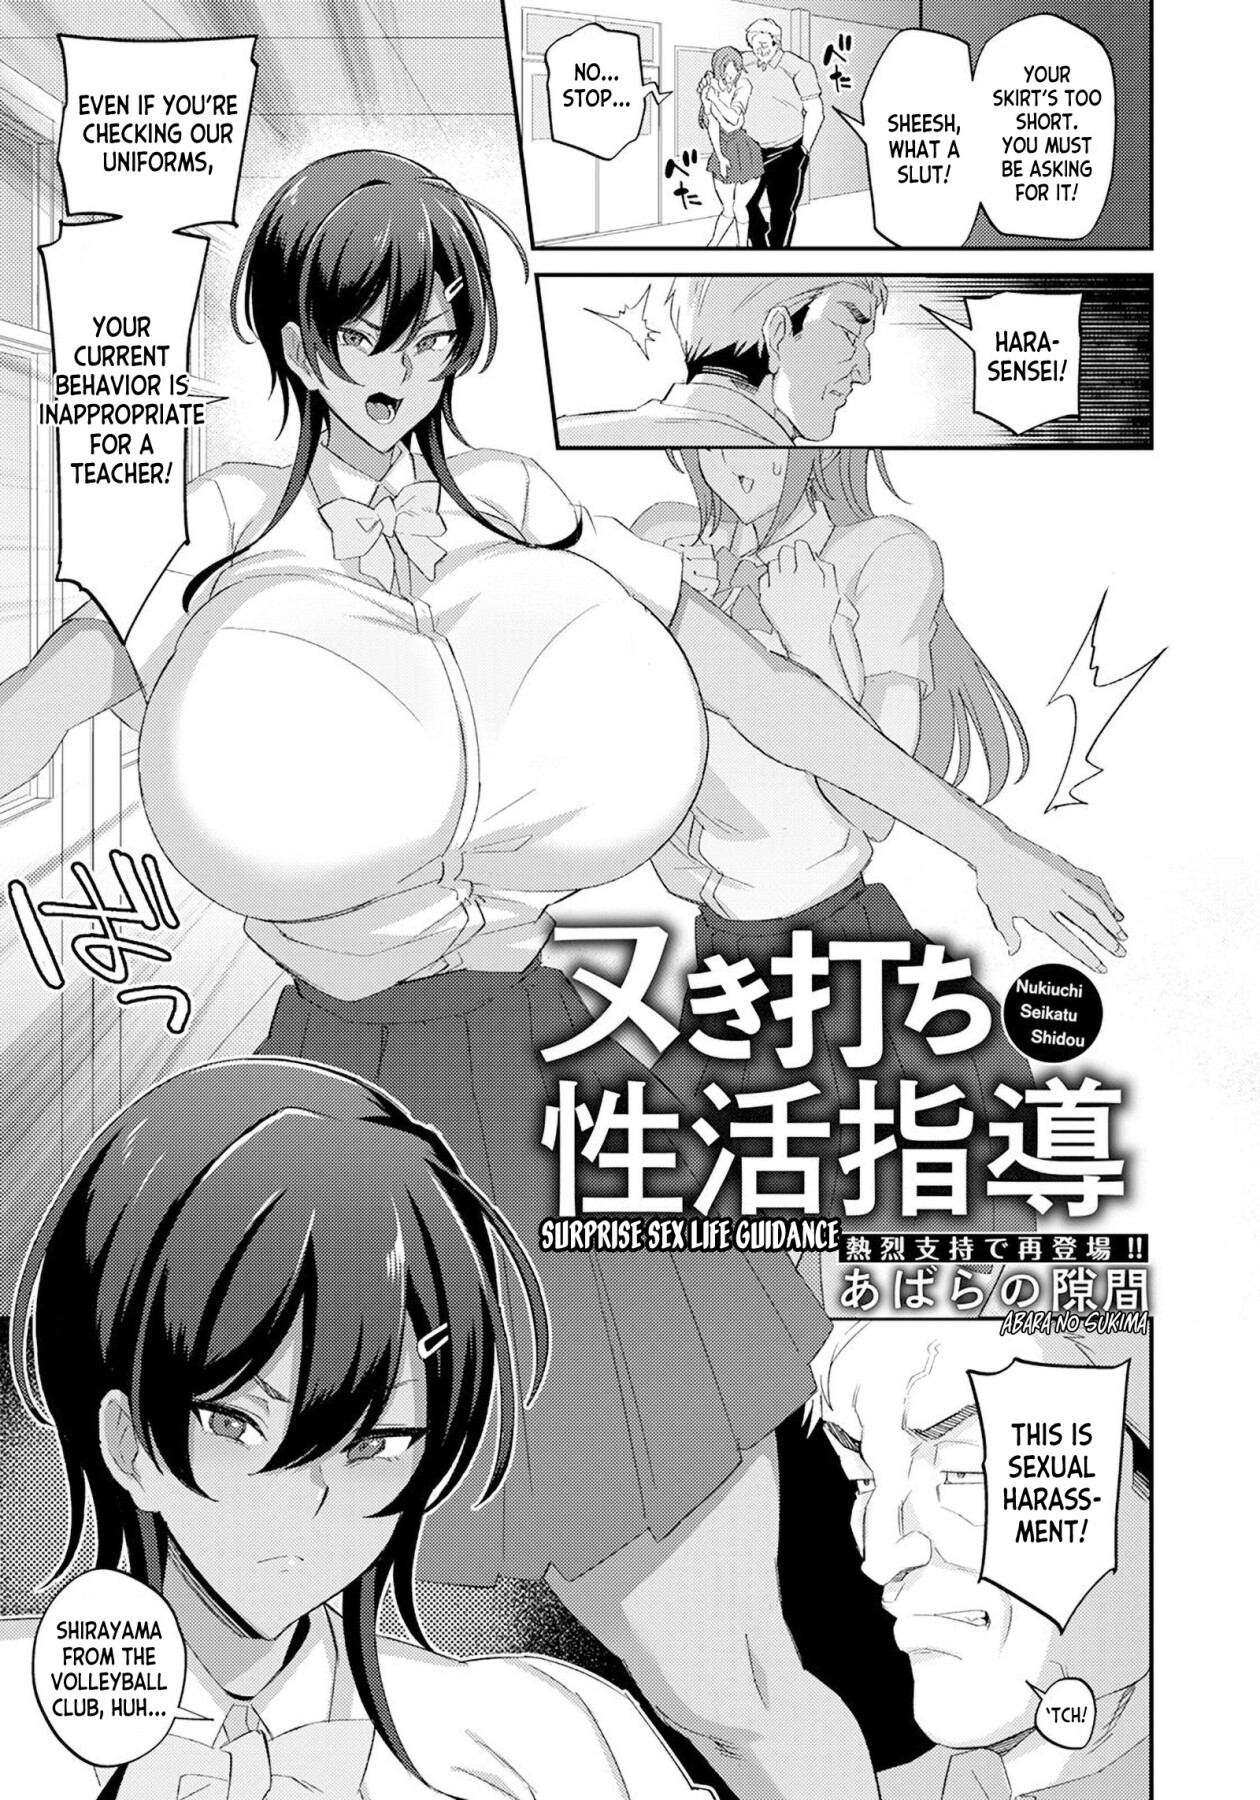 Hentai Manga Comic-Surprise Sex Life Guidance-Read-1